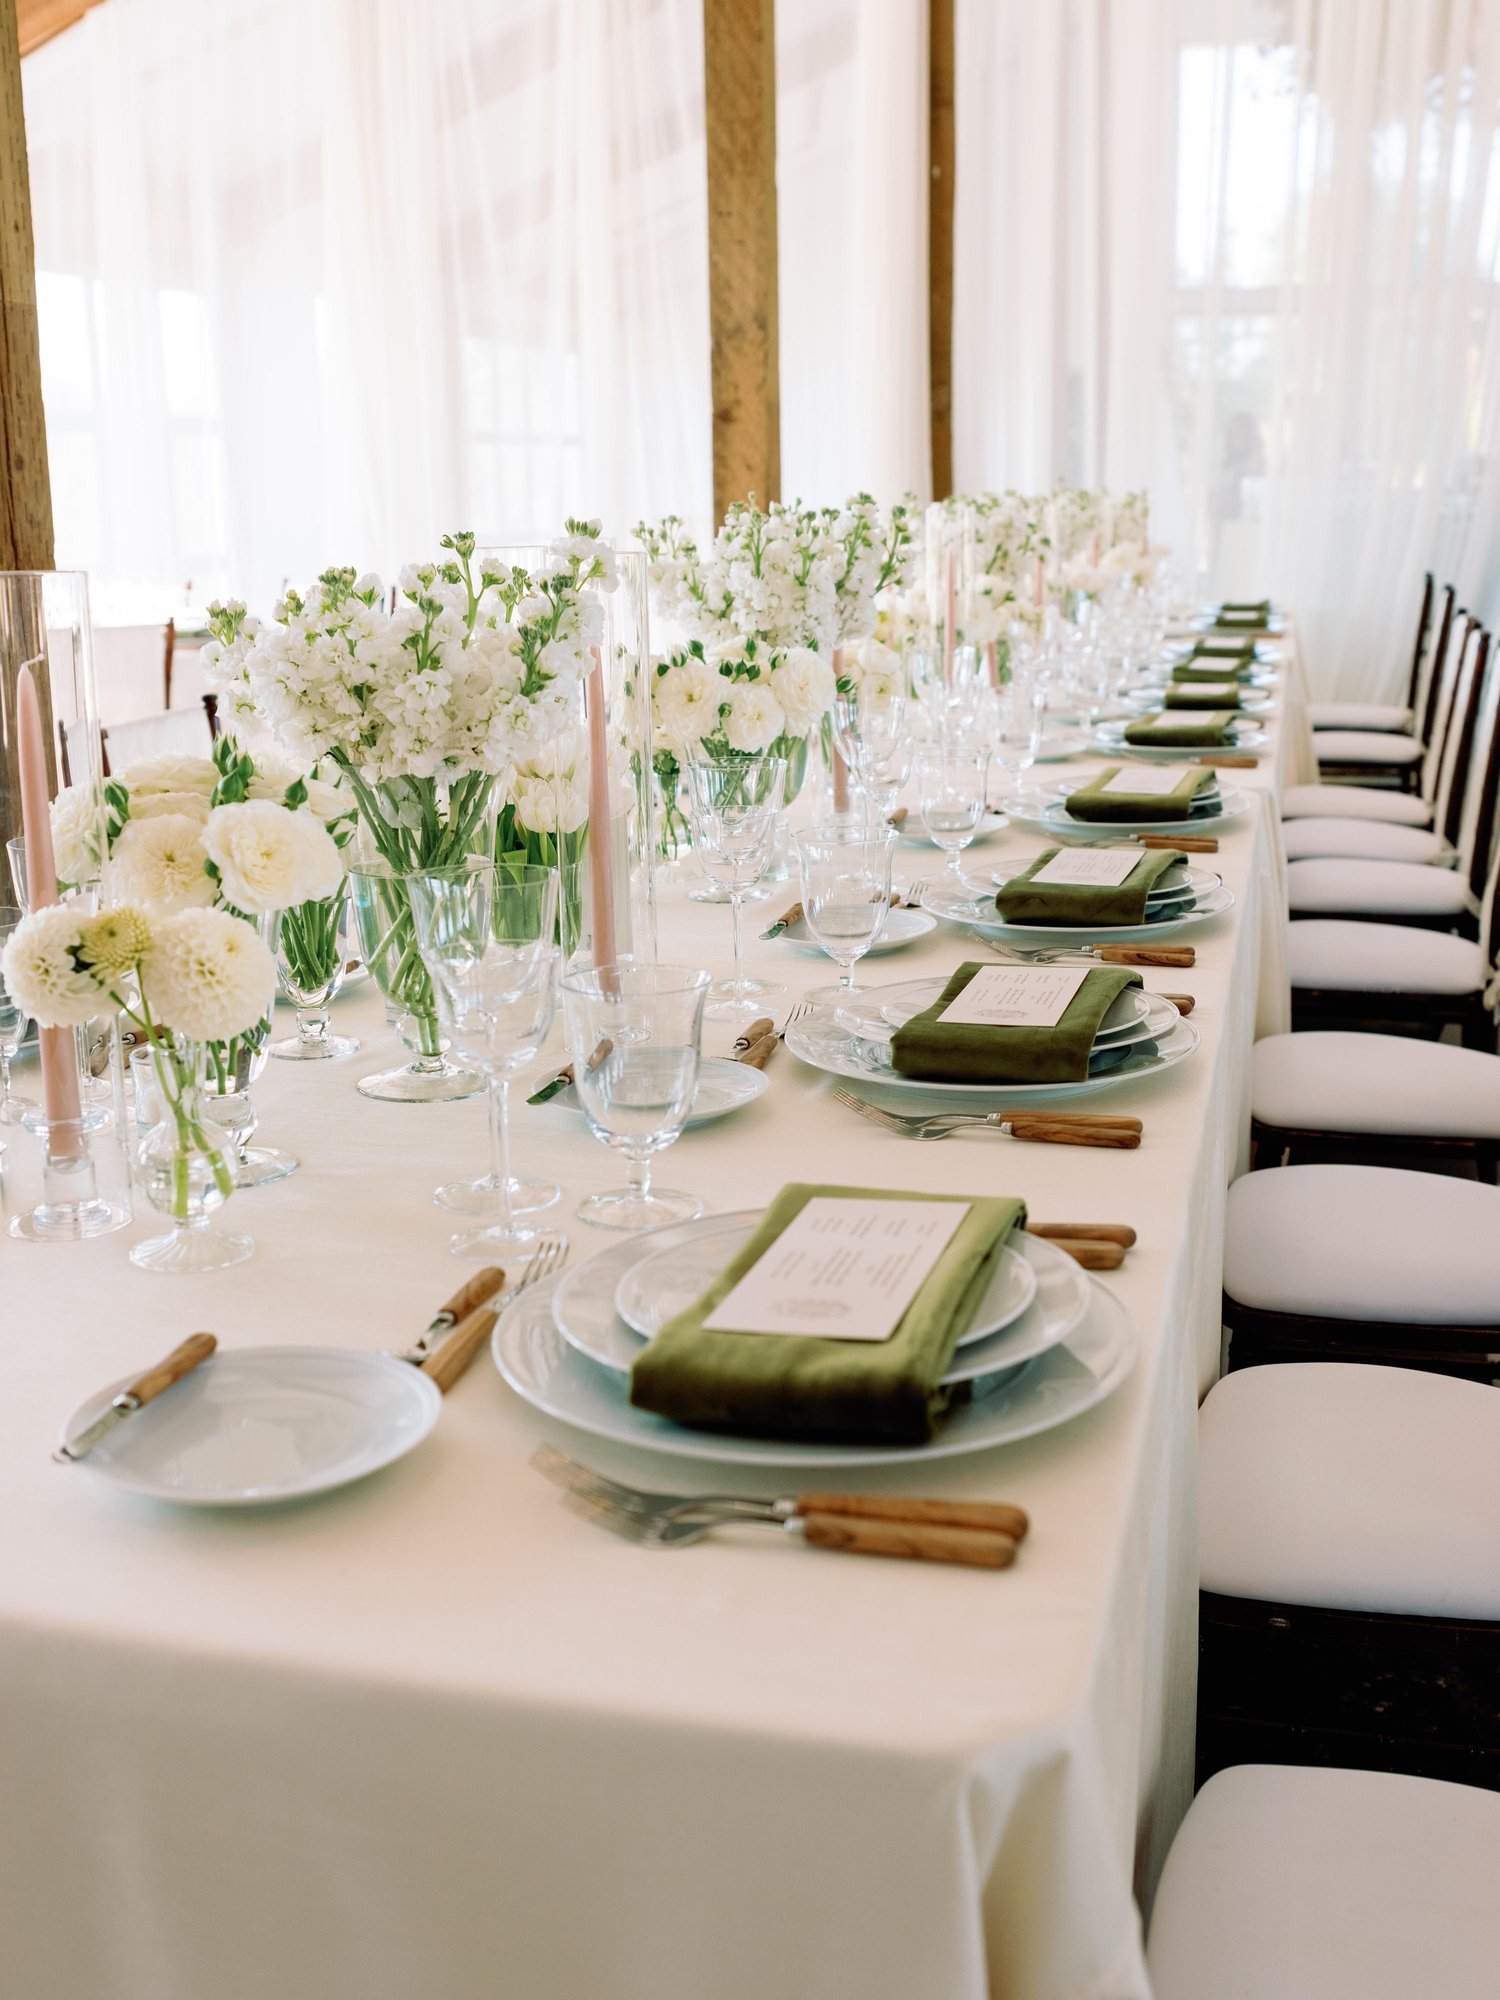 white-table-floral-arrangements-indoor-wedding-dinner.jpg